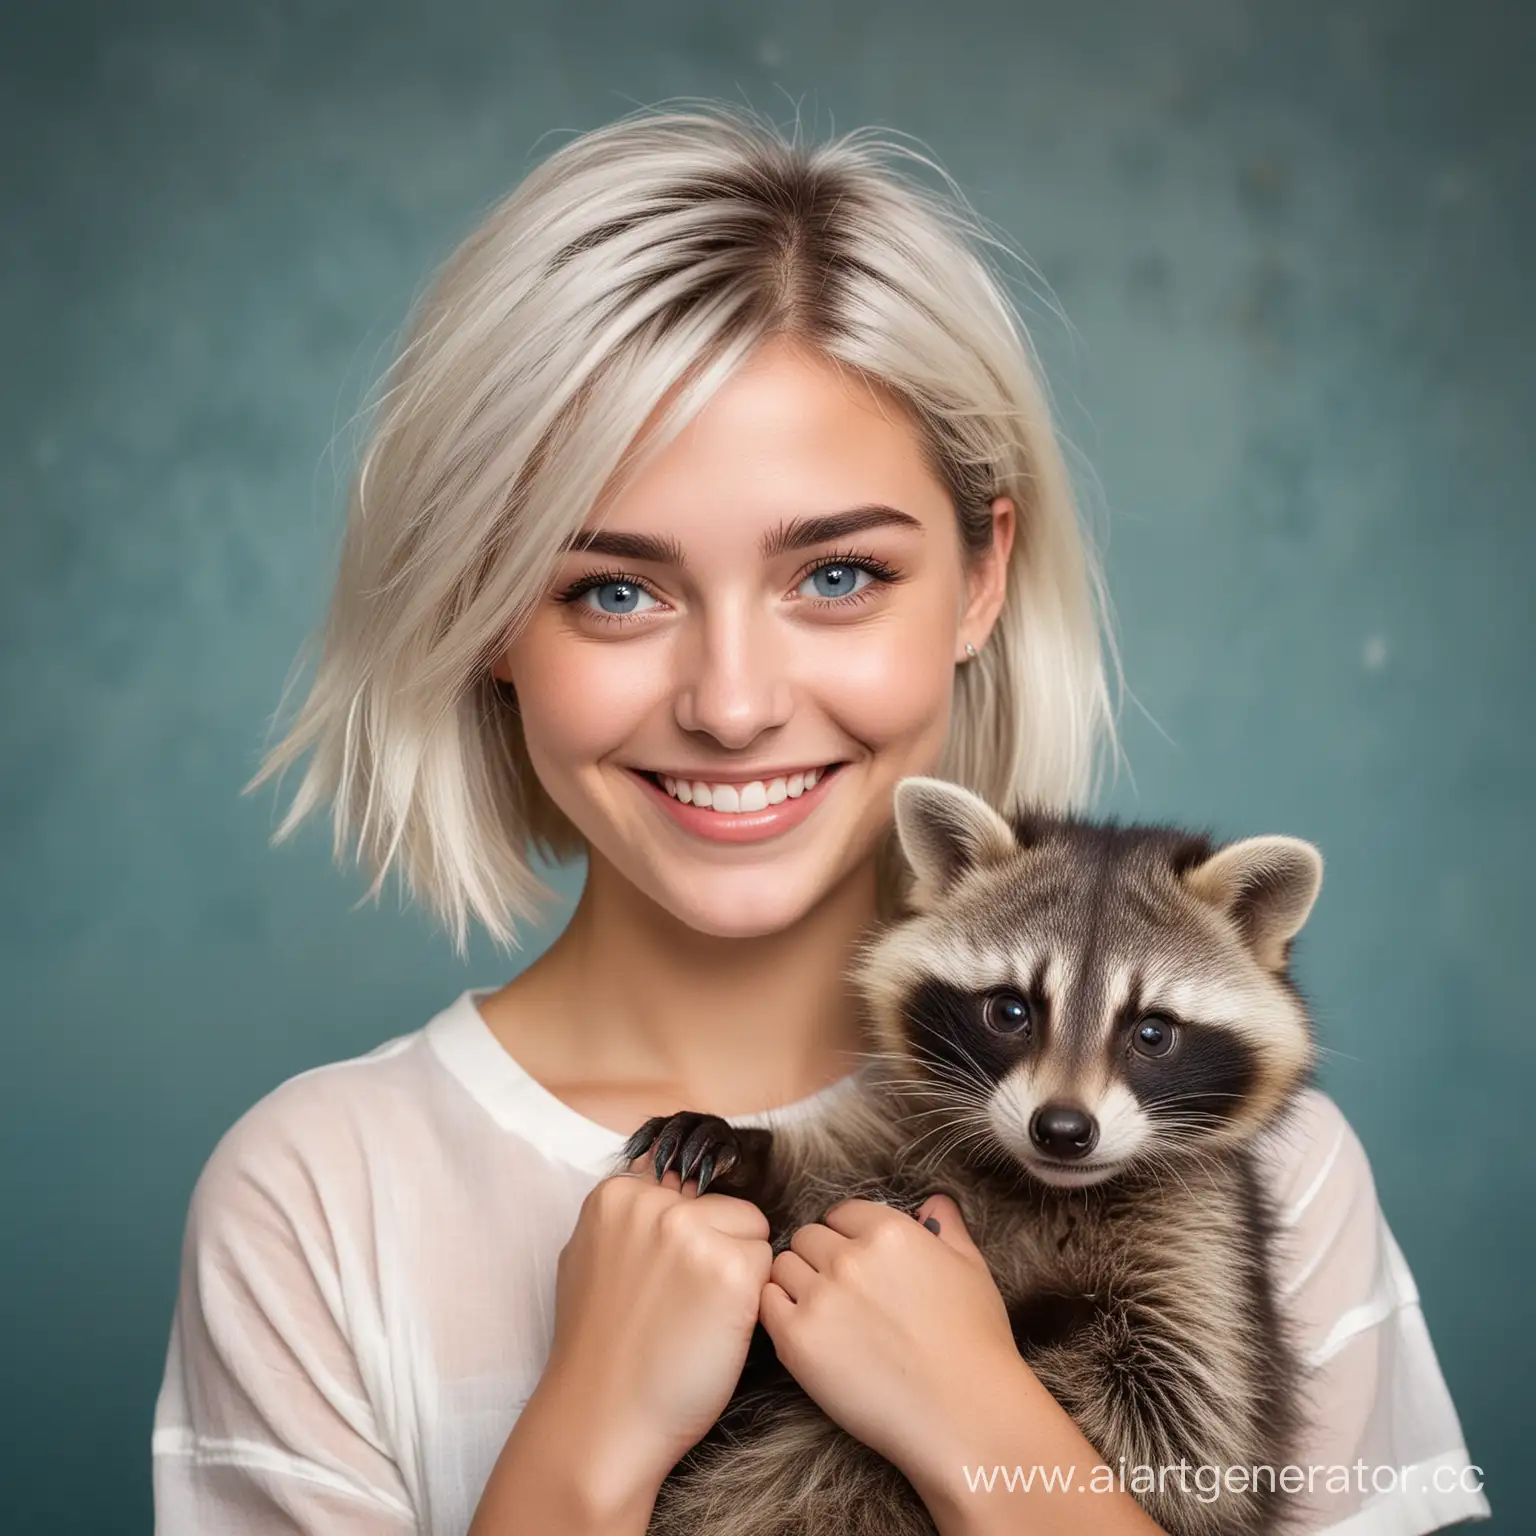 Joyful-Young-Woman-with-Bob-Hair-Holding-a-Raccoon-Candid-Portrait